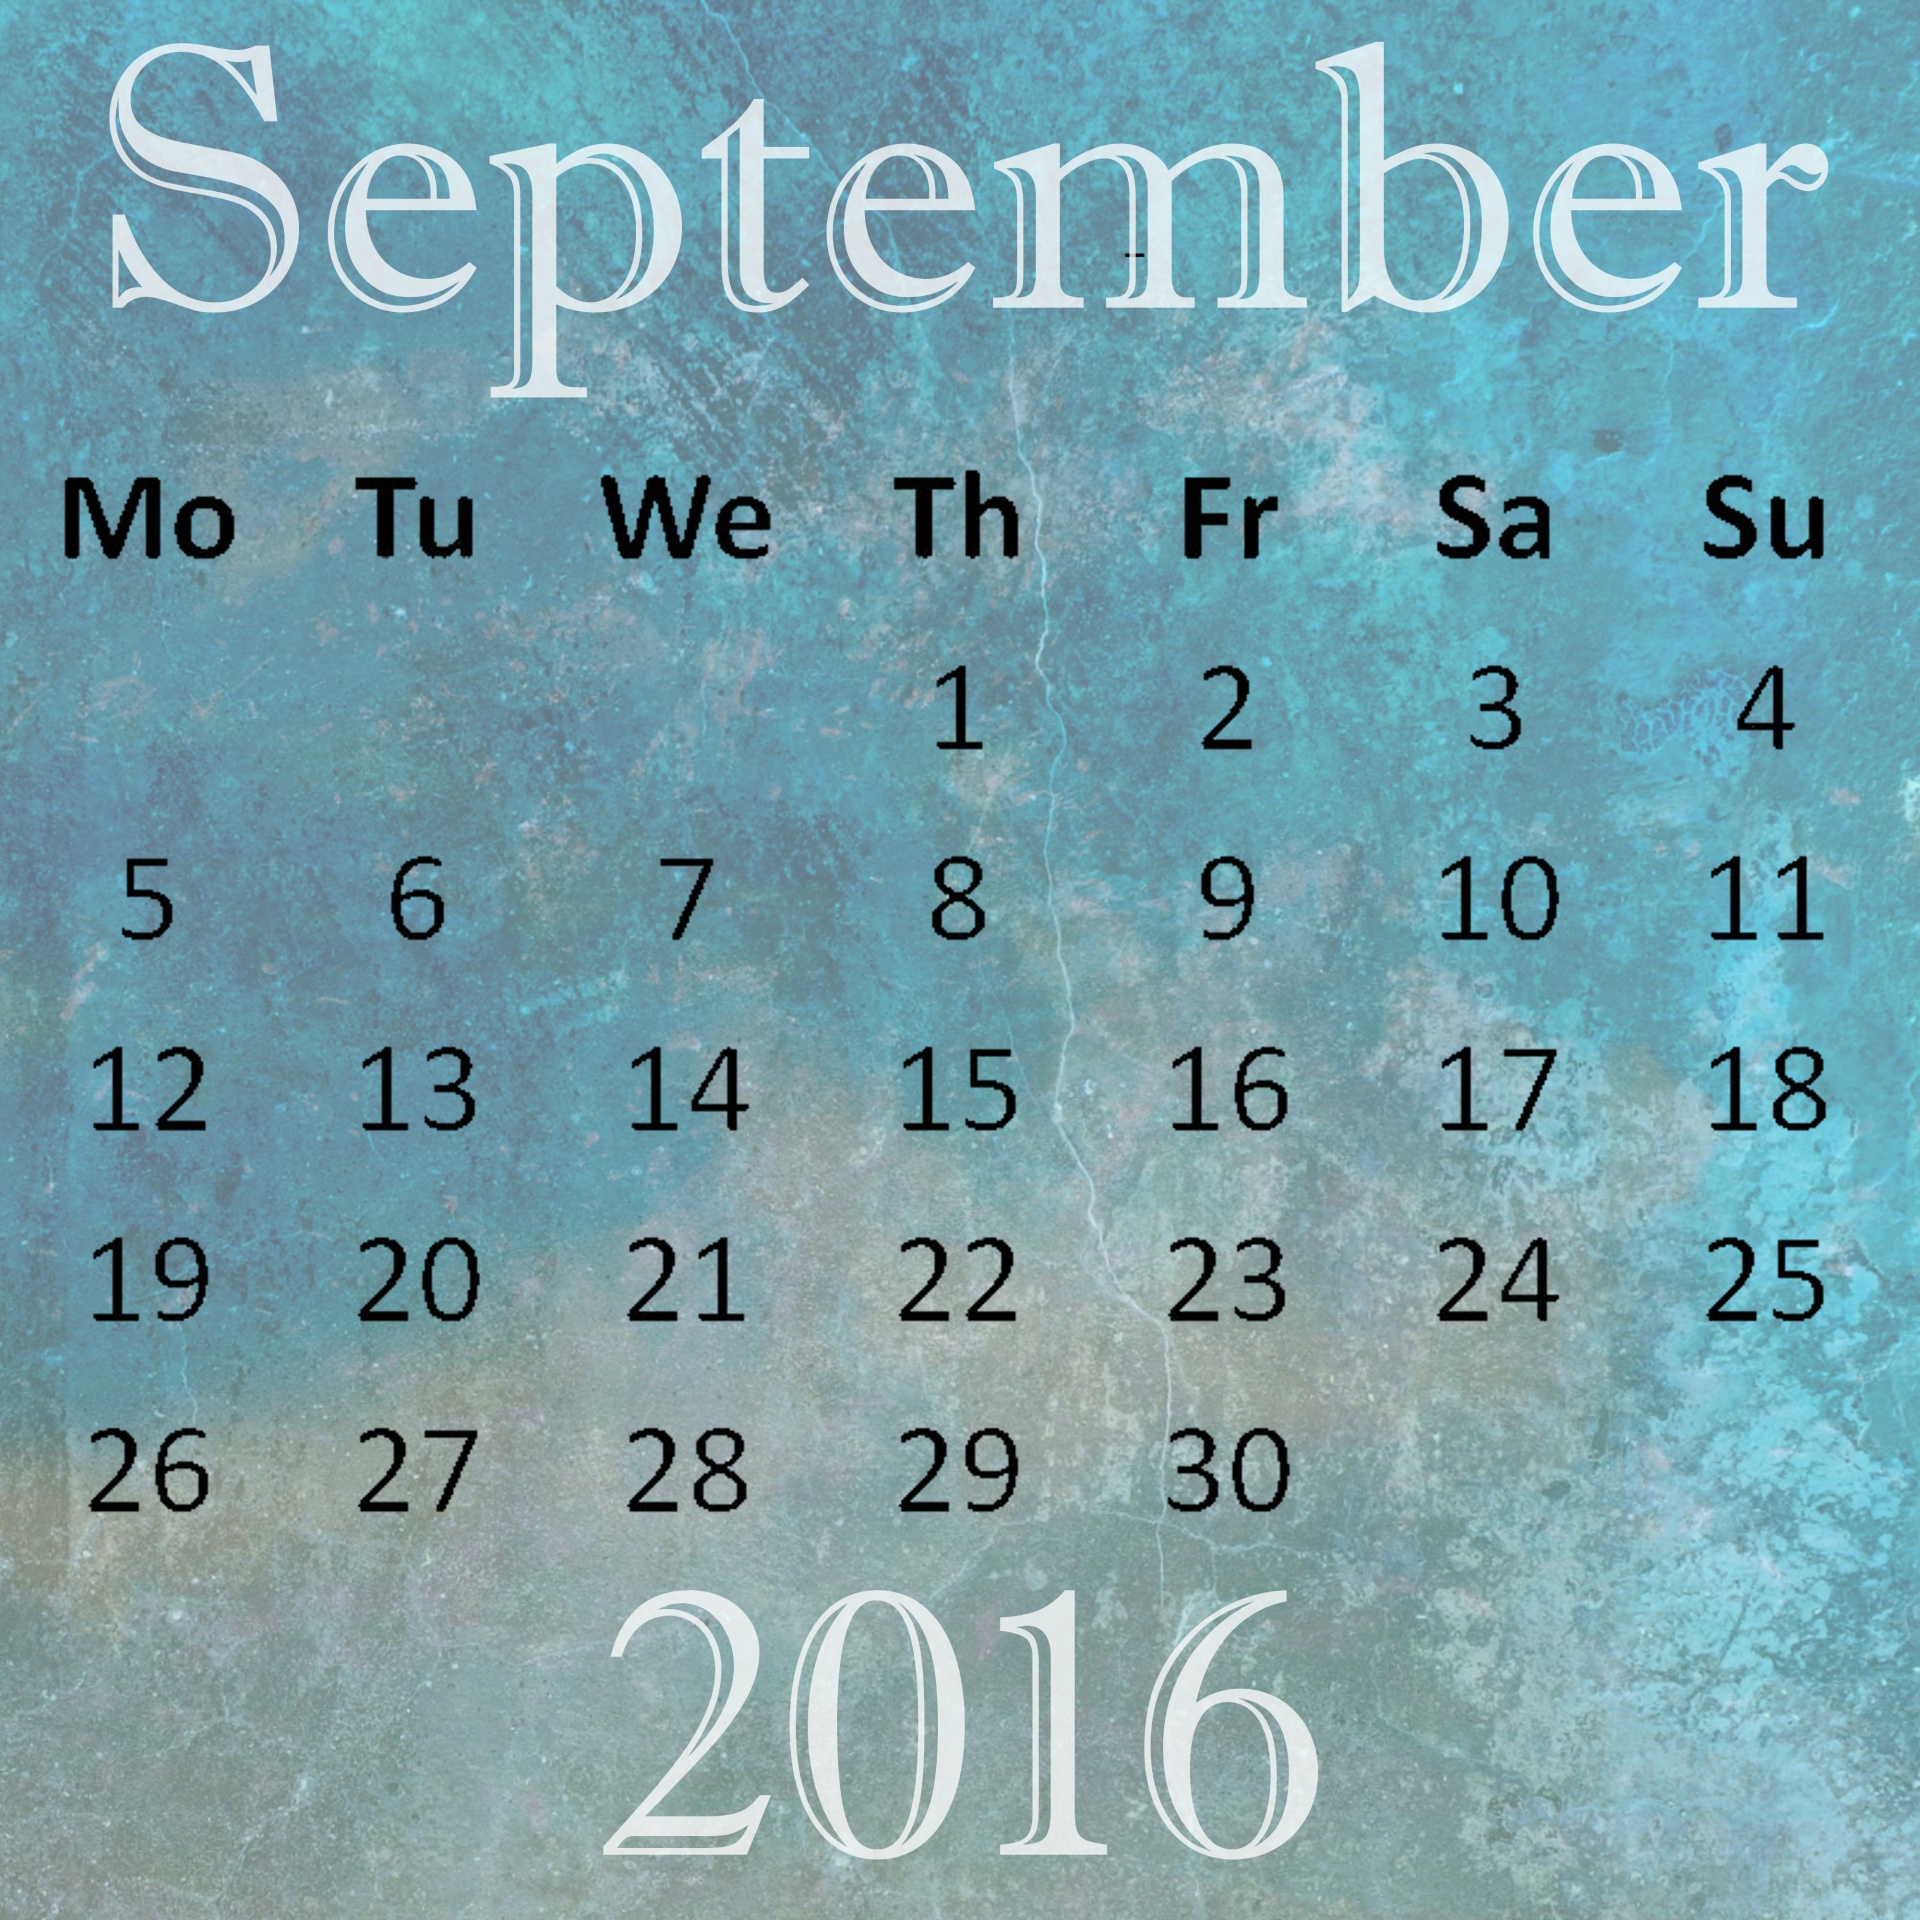 kalendar-bulan-september-2017-sedangkan-akhir-bulan-september-2017